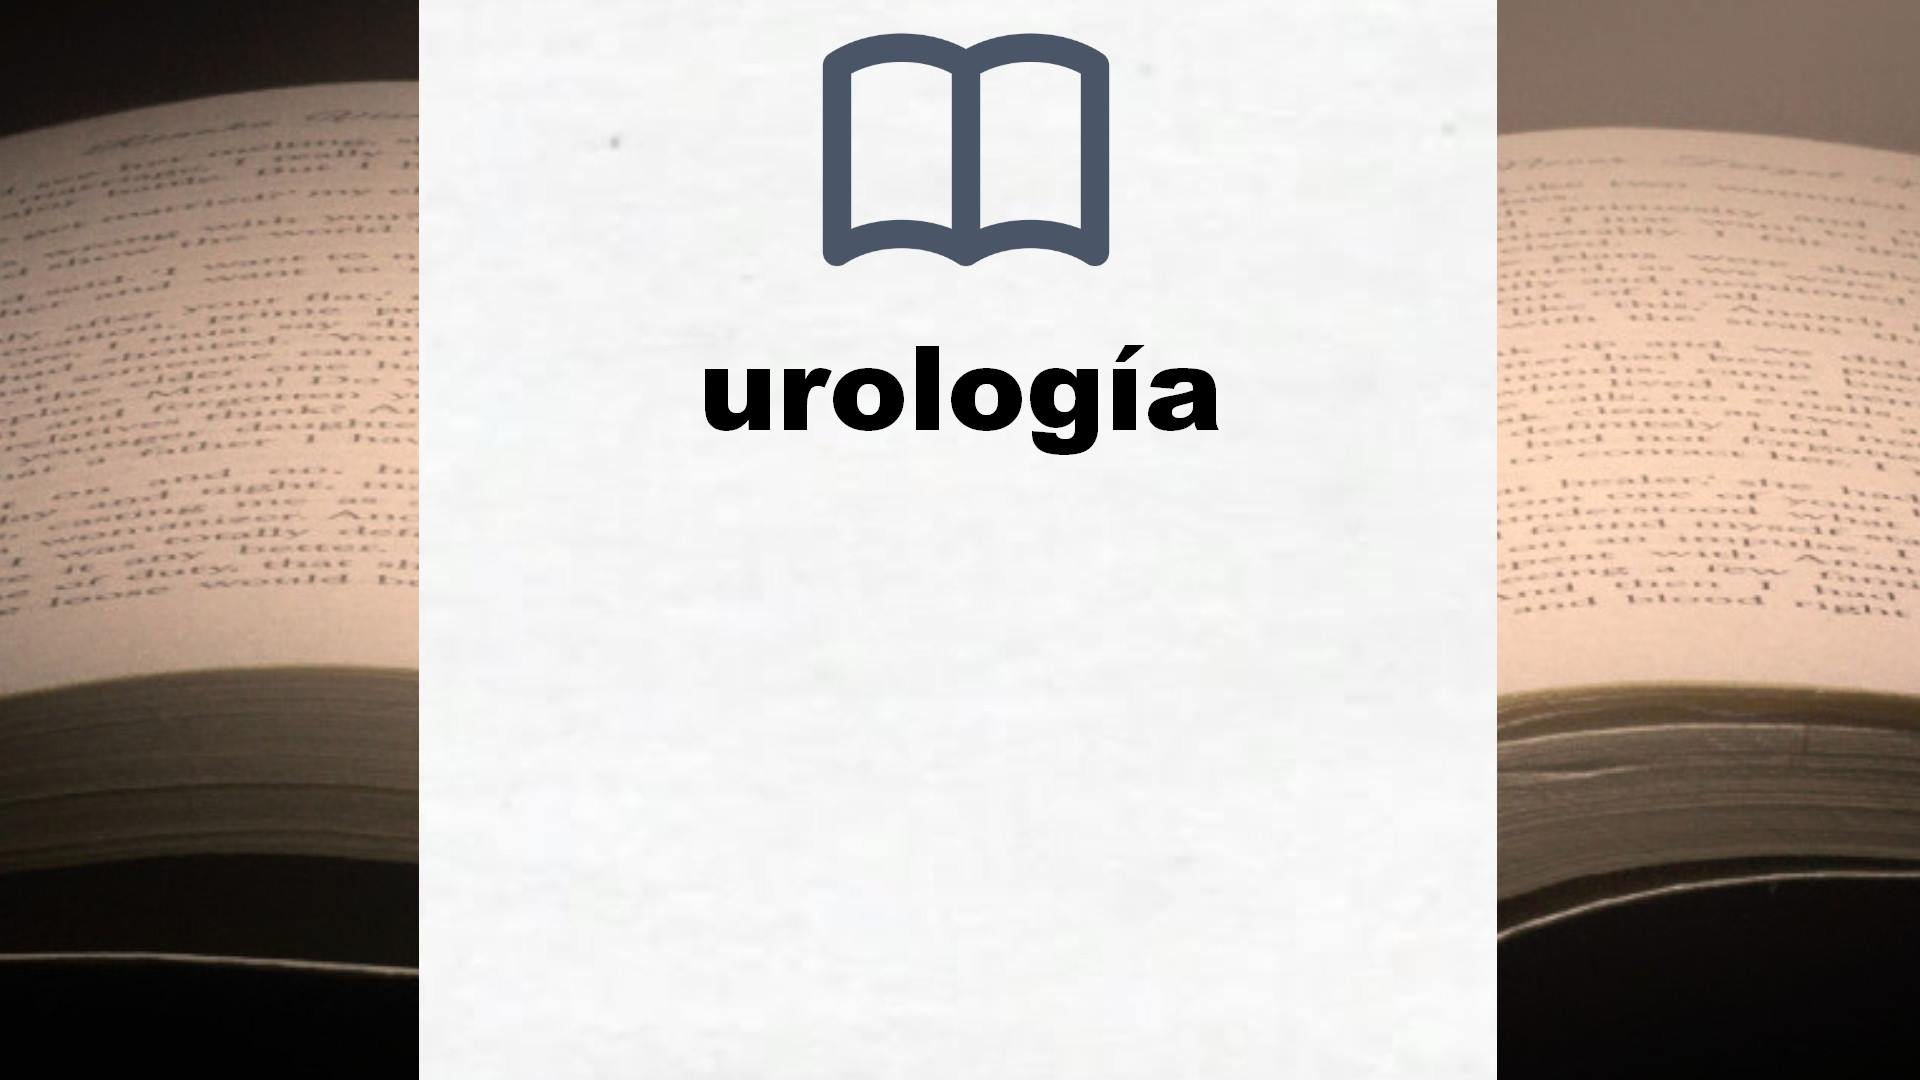 Libros sobre urología